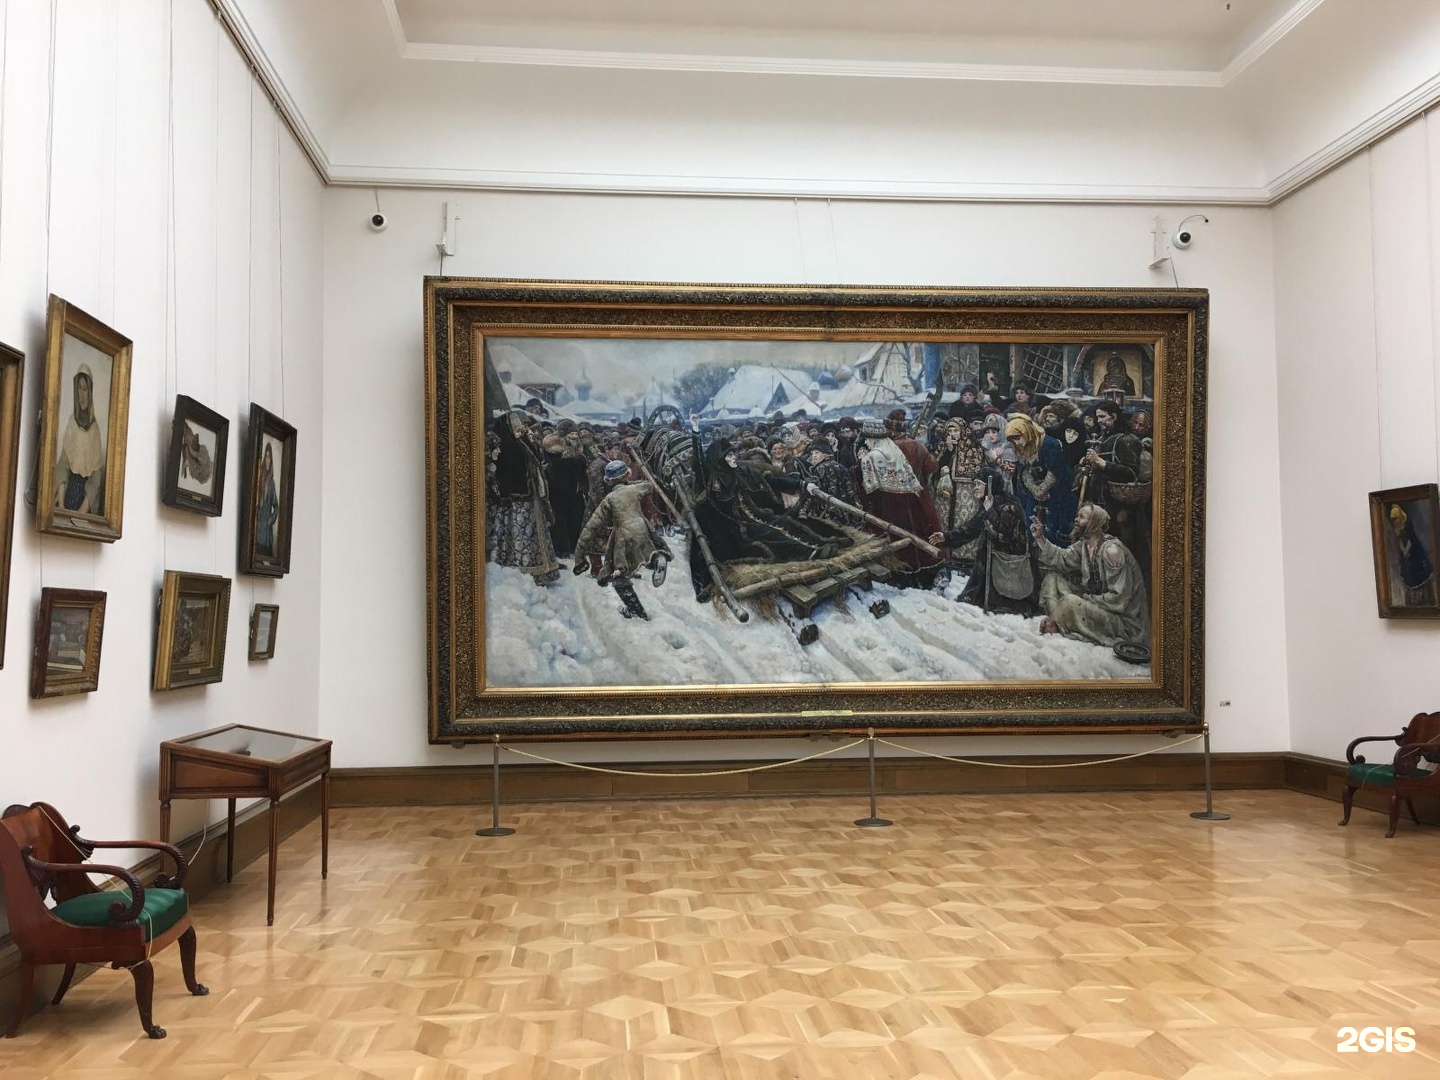 Московская картинная галерея Третьяковская